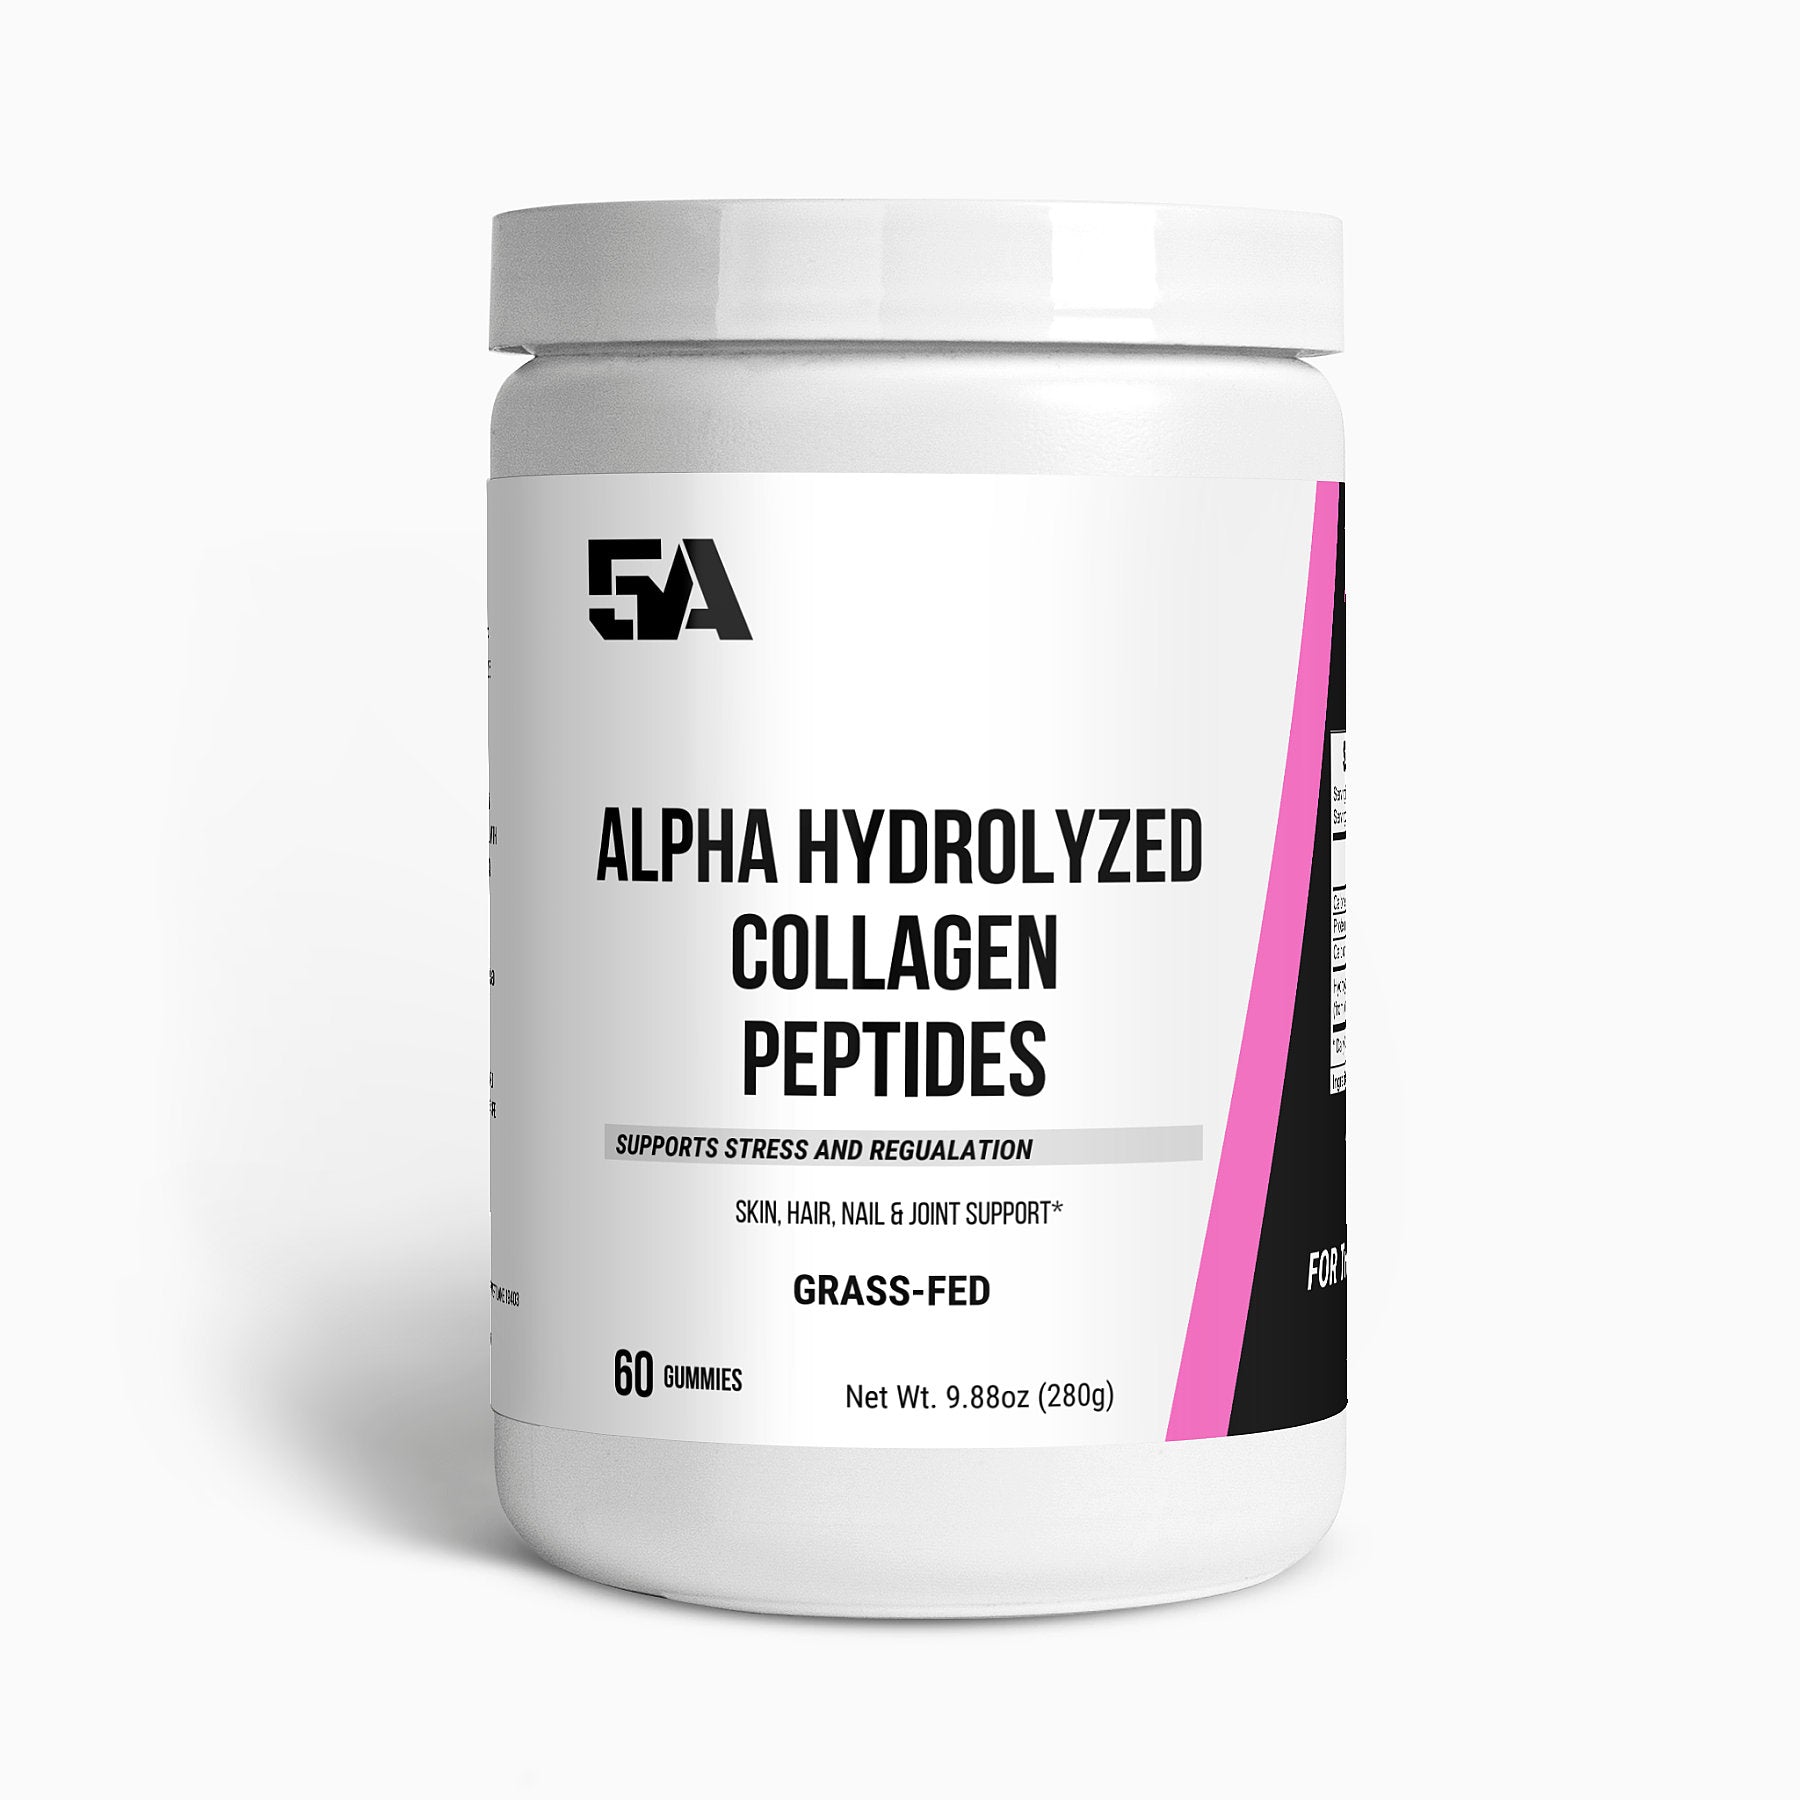 ALPHA Grass-Fed Hydrolyzed Collagen Peptides